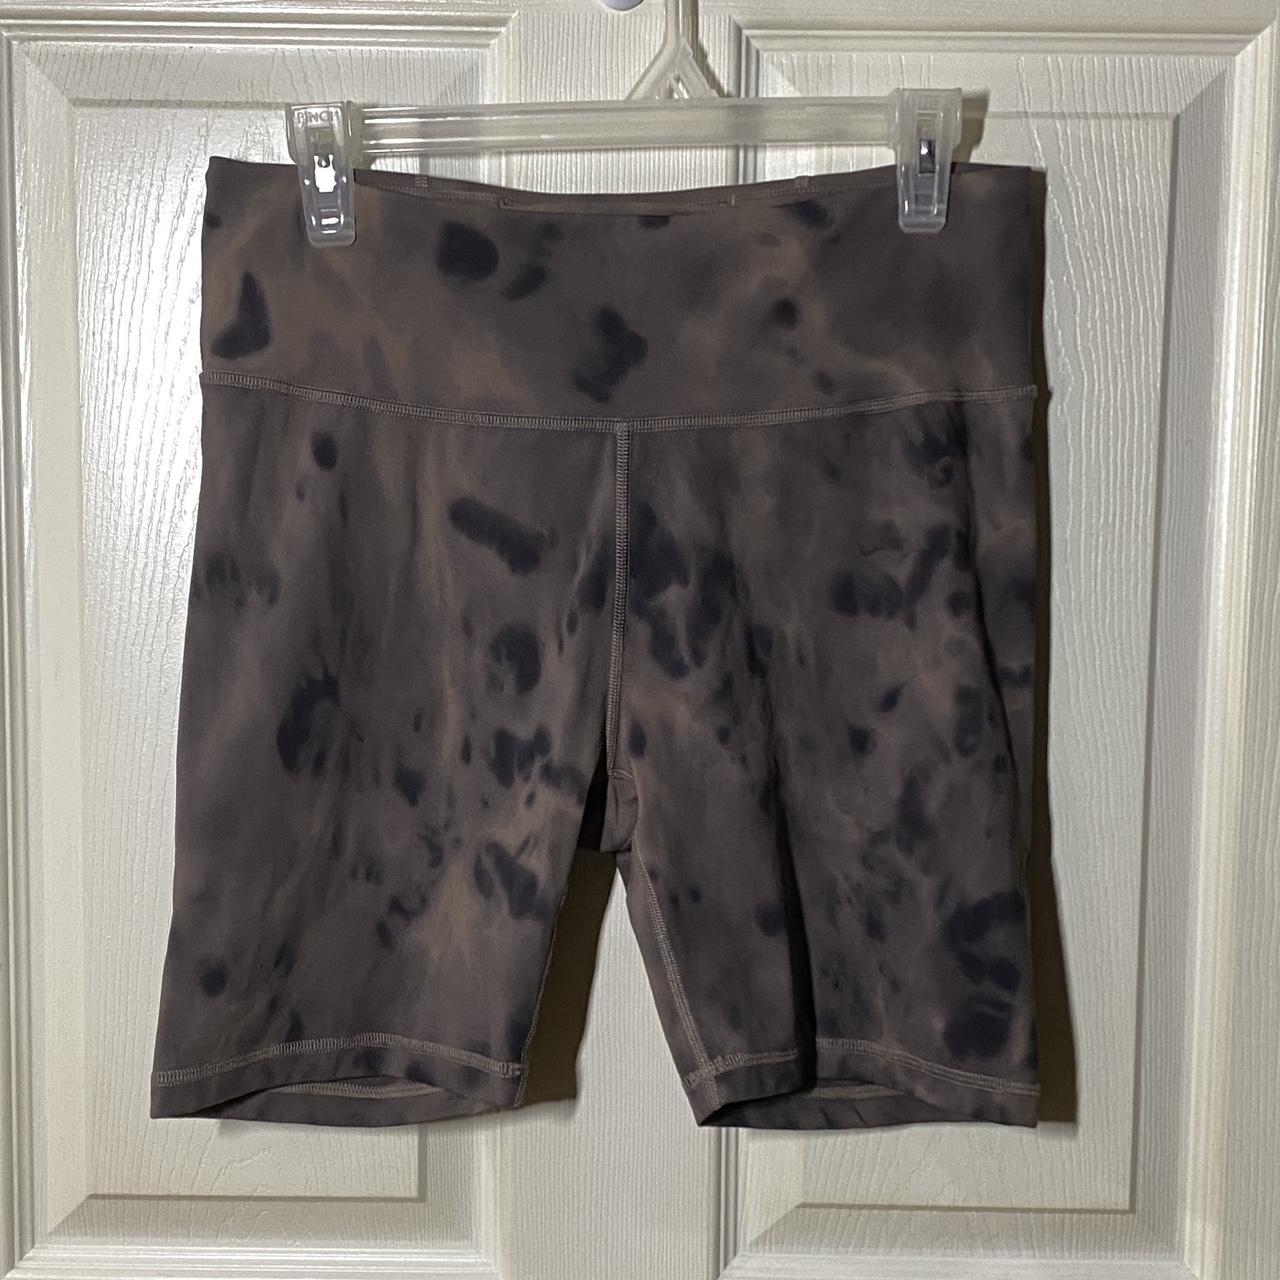 joy lab bike shorts black/brown stone wash look size - Depop